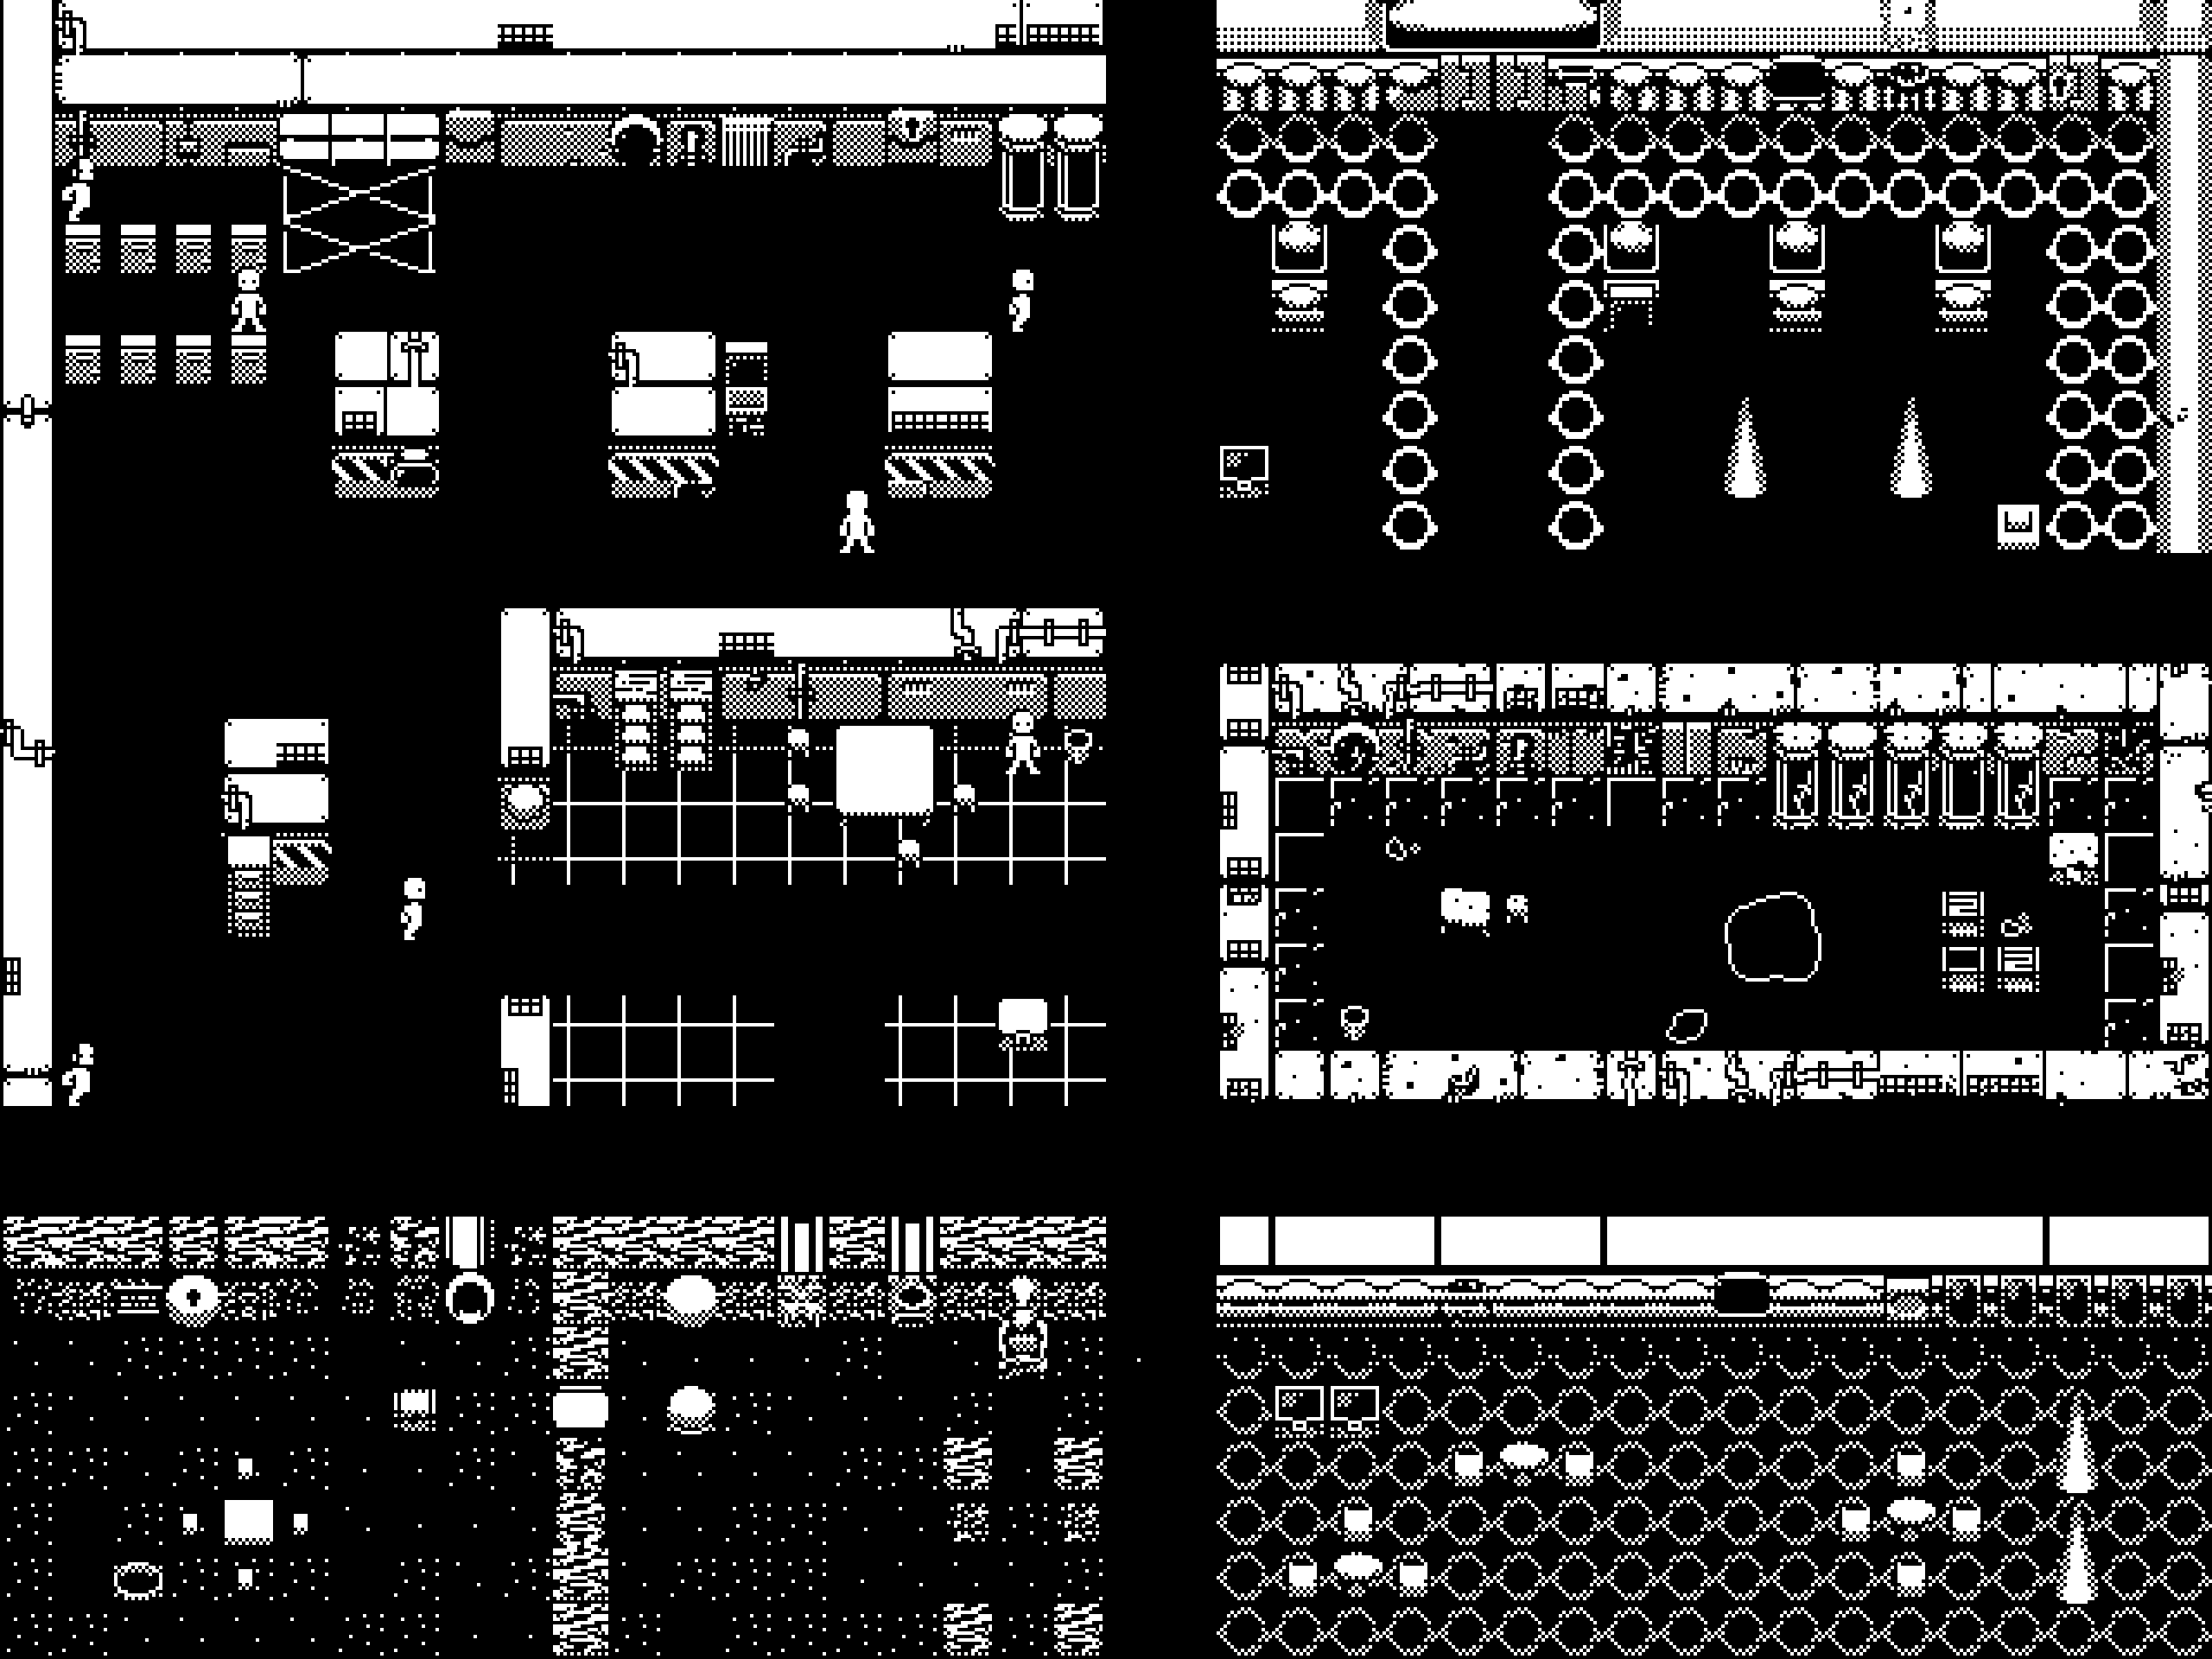 1 Bit Sci Fi Pixel Art Tileset 16x16 By Coldrice